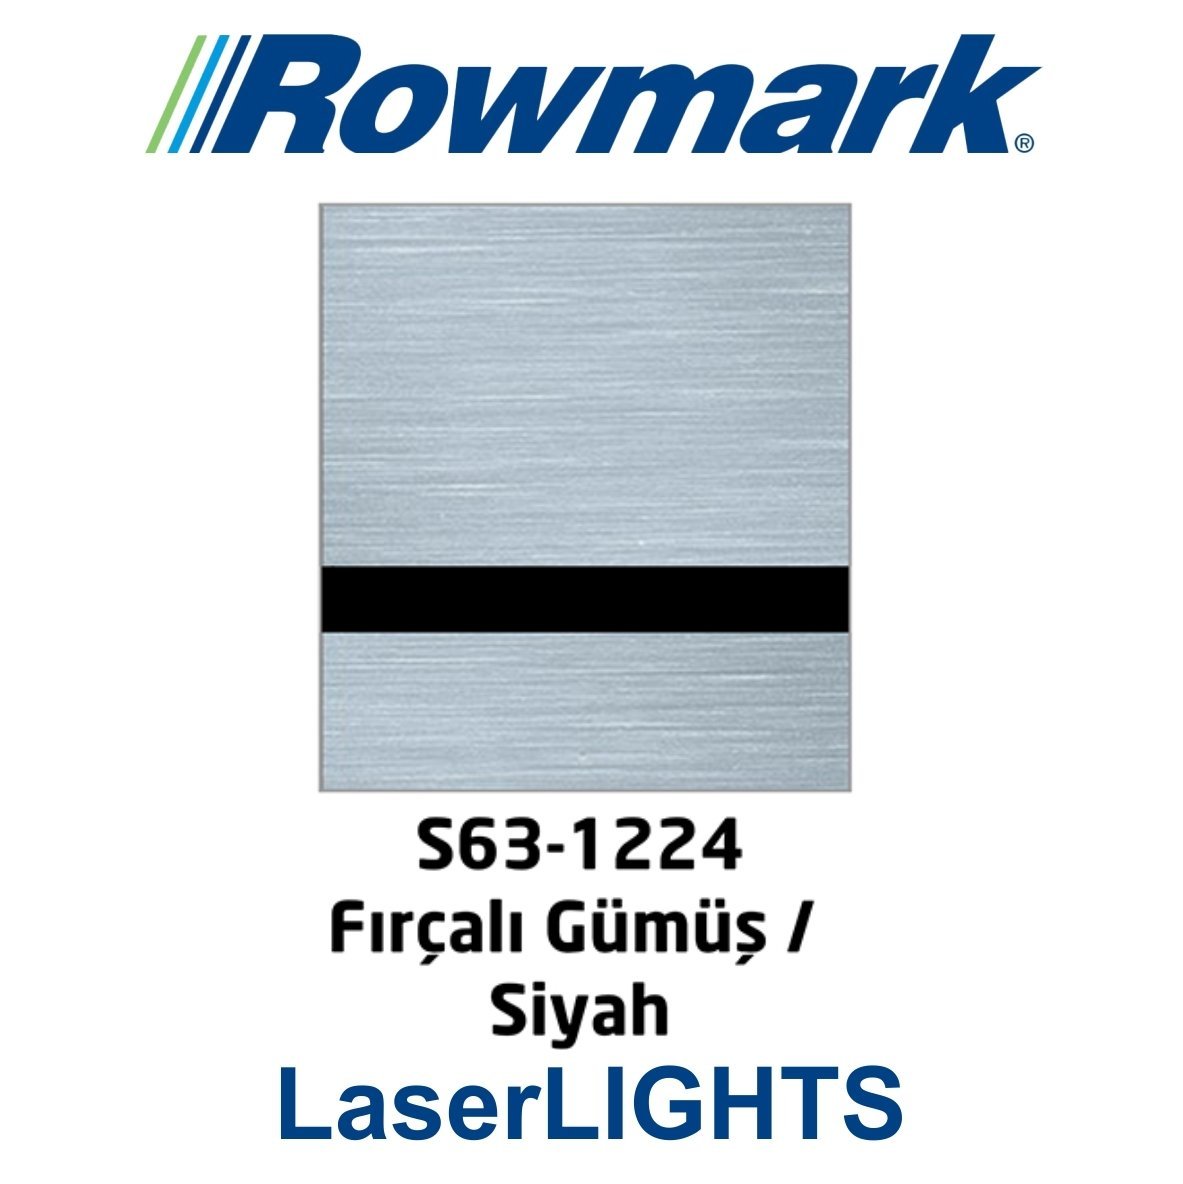 LaserLights 0.2 Fırçalı Gümüş (Brushed Silver) / Siyah Lazer Plaka - Rowmark S63-1224